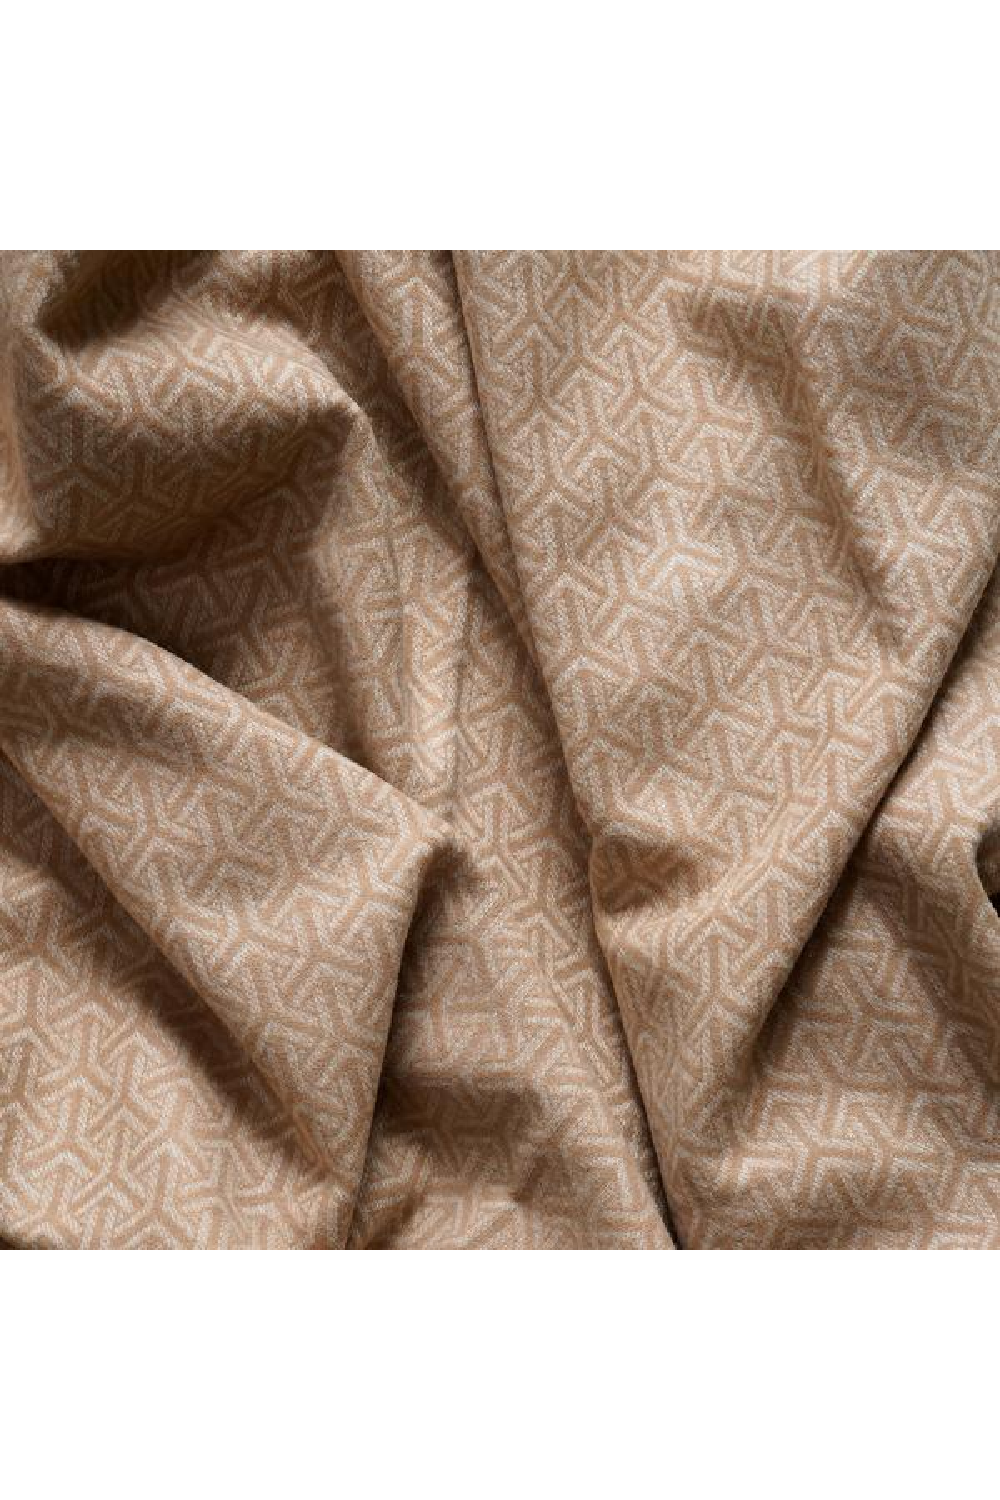 Tan Wool and Cashmere Geometric Throw | Andrew Martin Monte | OROA